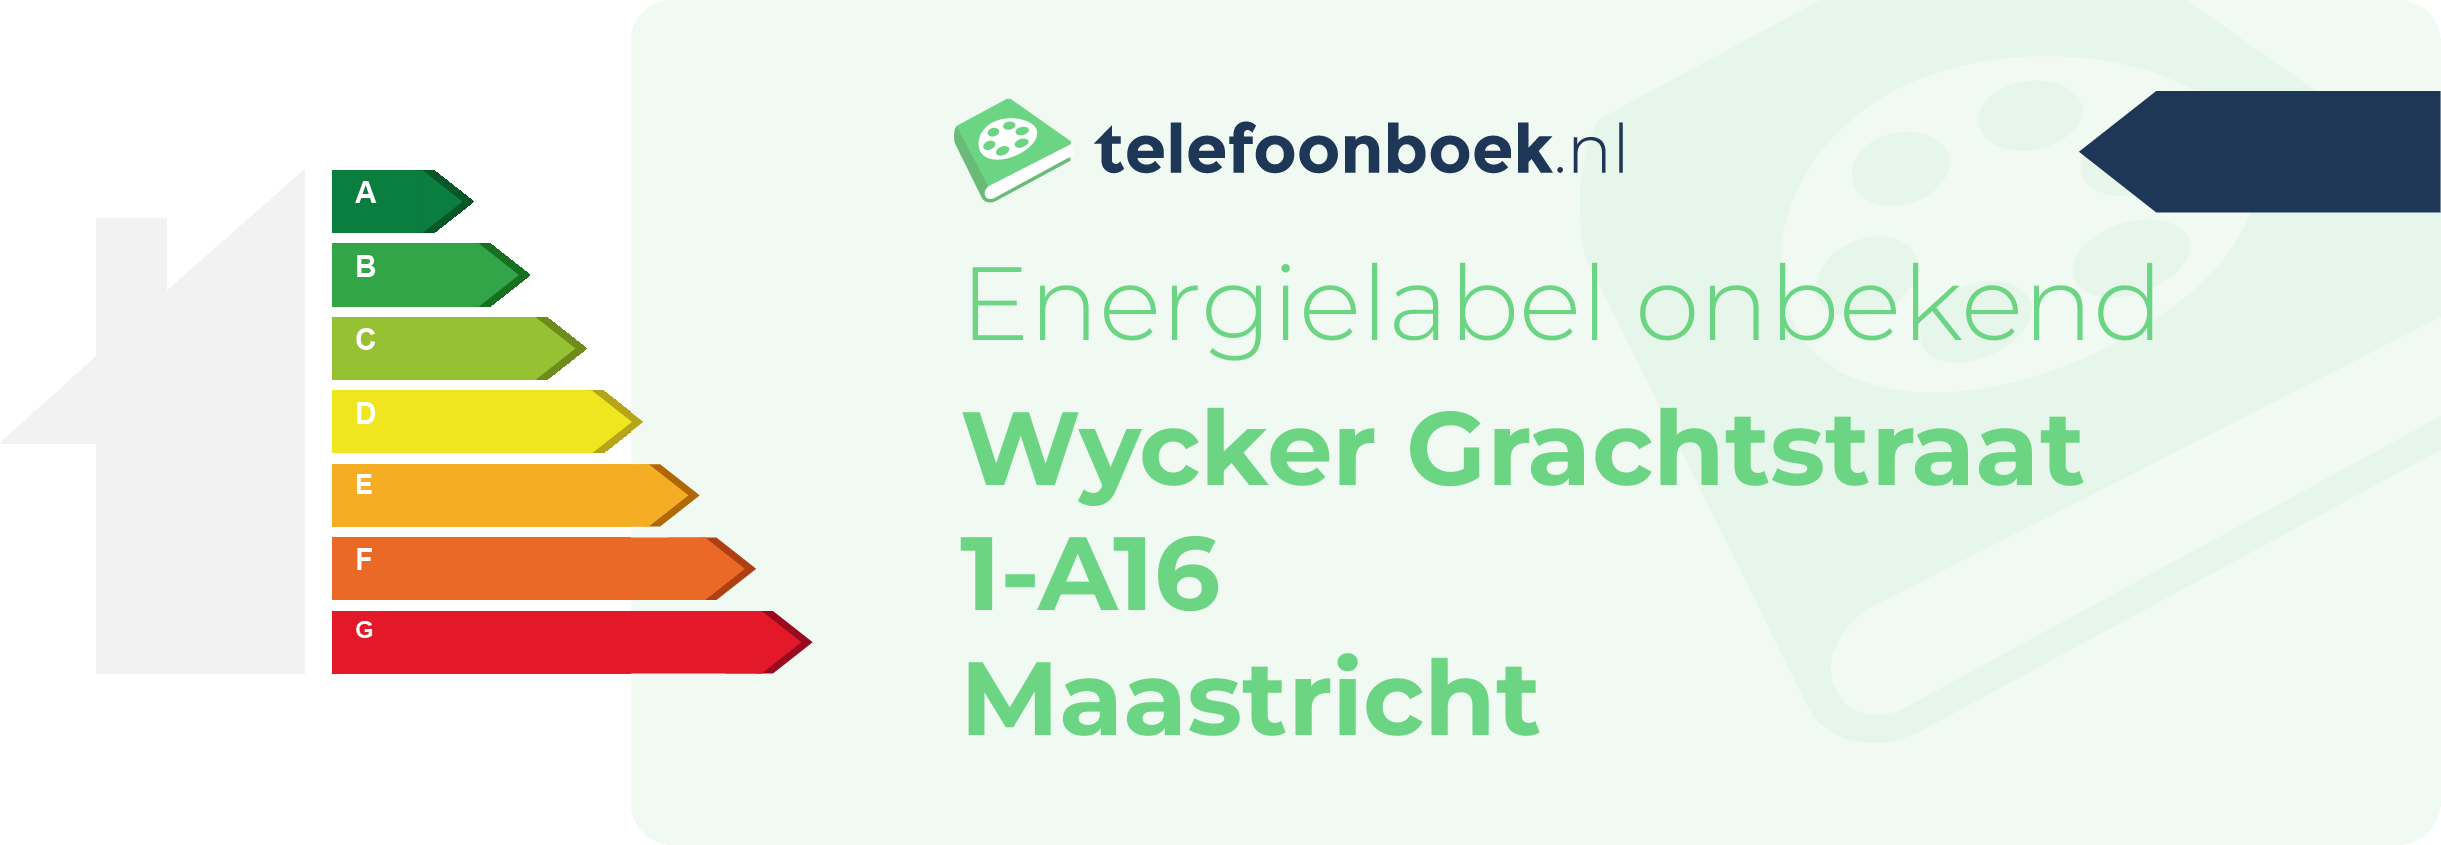 Energielabel Wycker Grachtstraat 1-A16 Maastricht